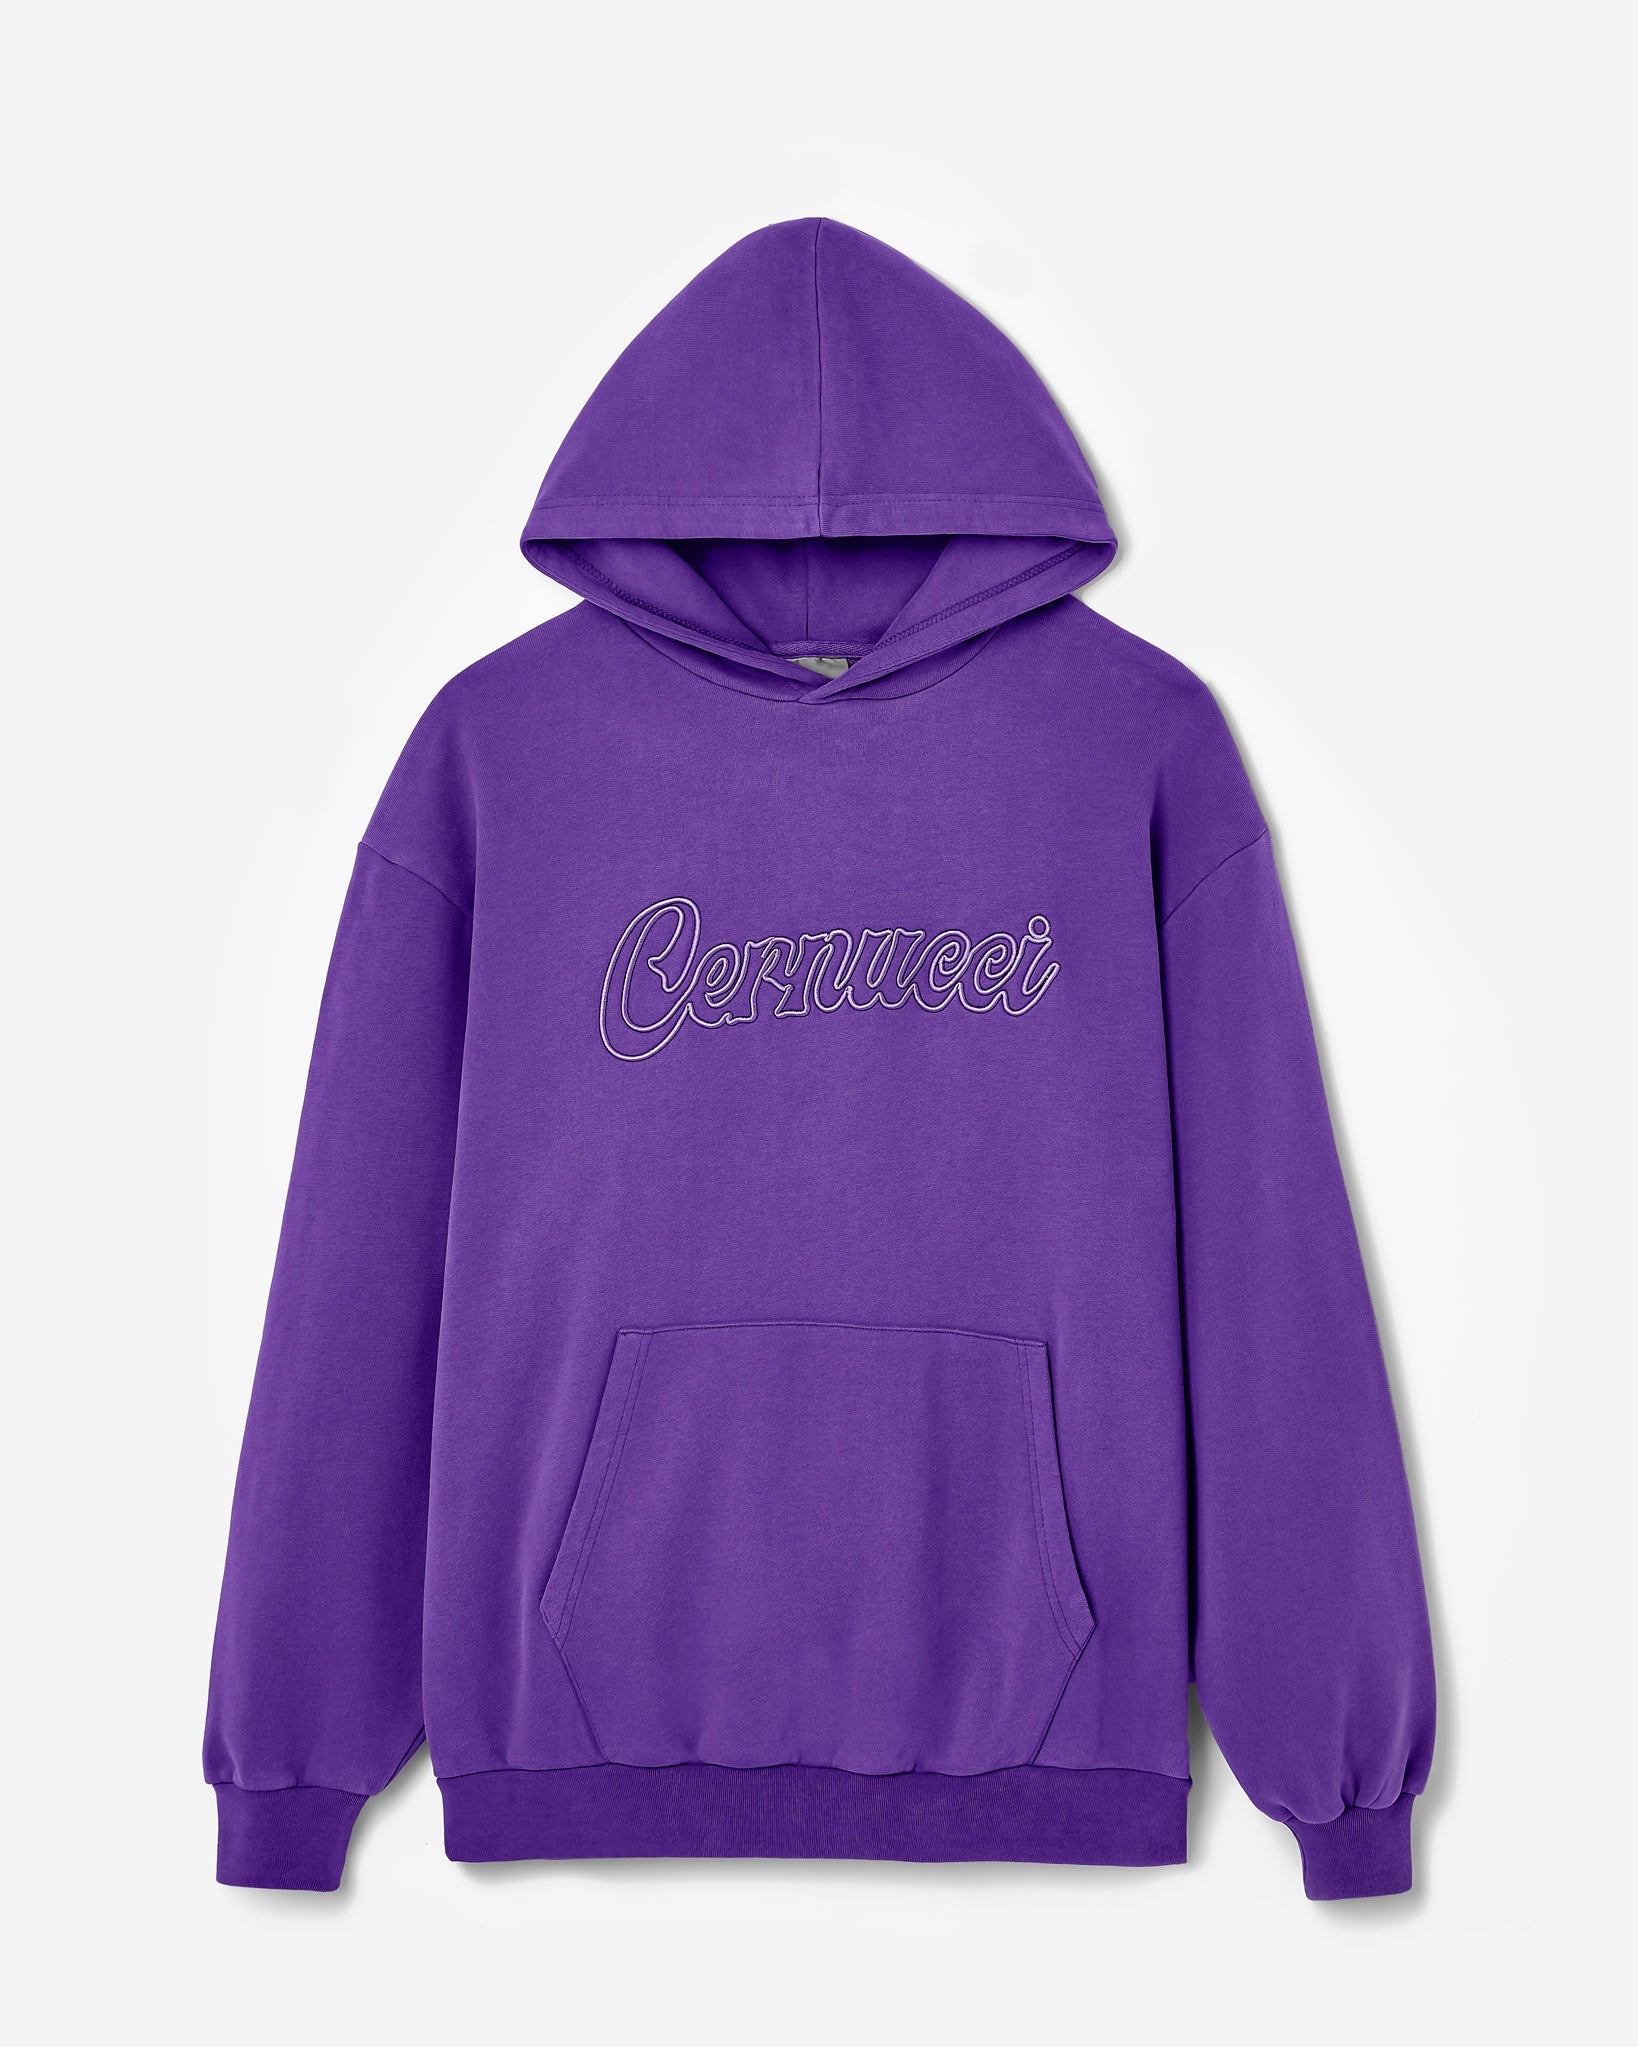 Cernucci Embroidered Hoodie - Purple – Cernucci US